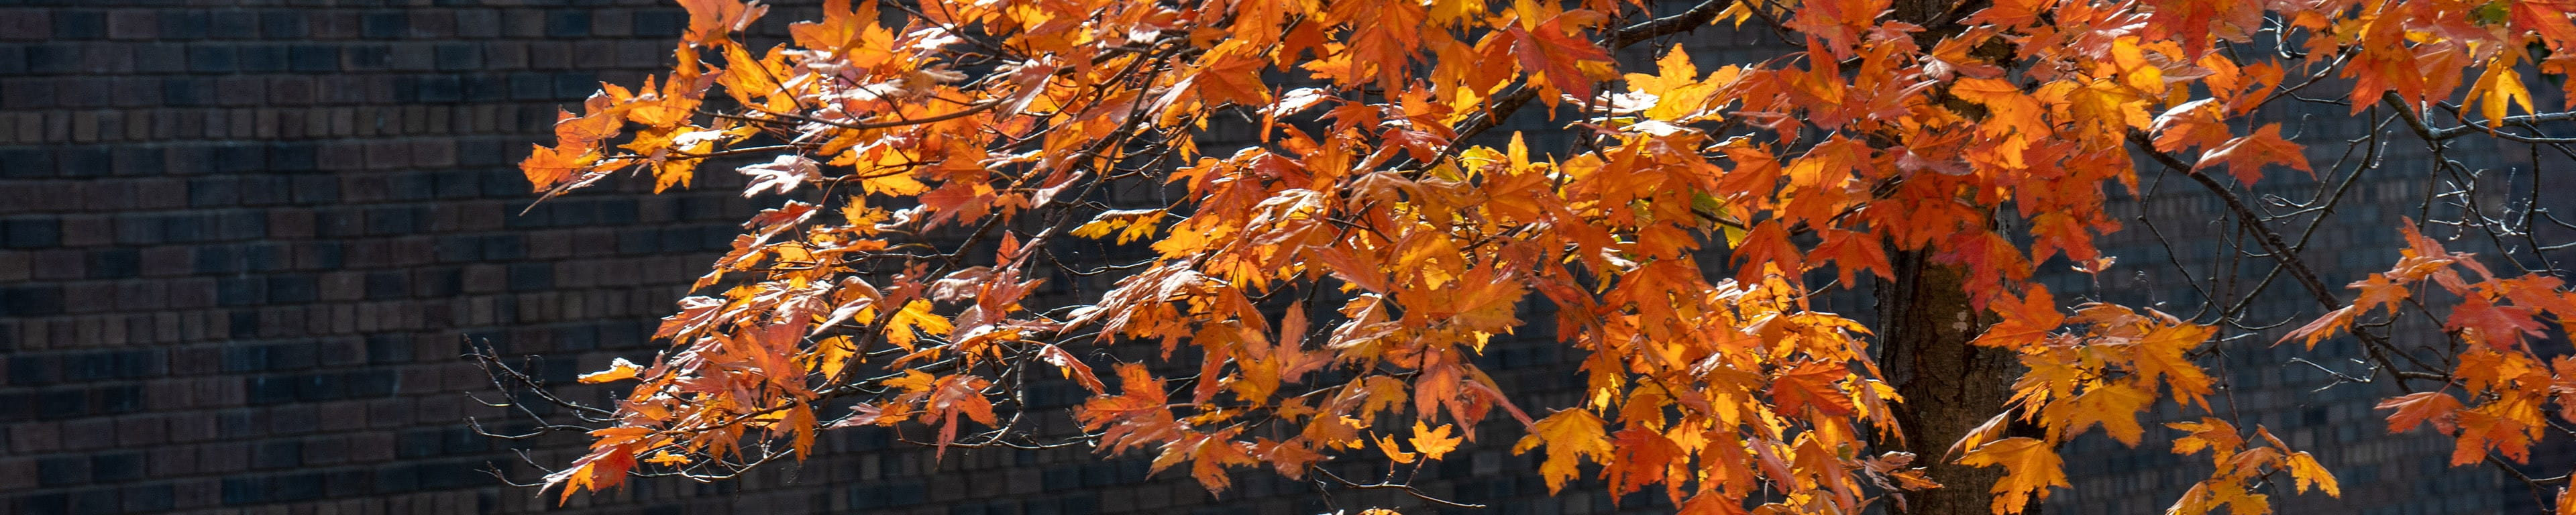 Dense fall foliage on campus.